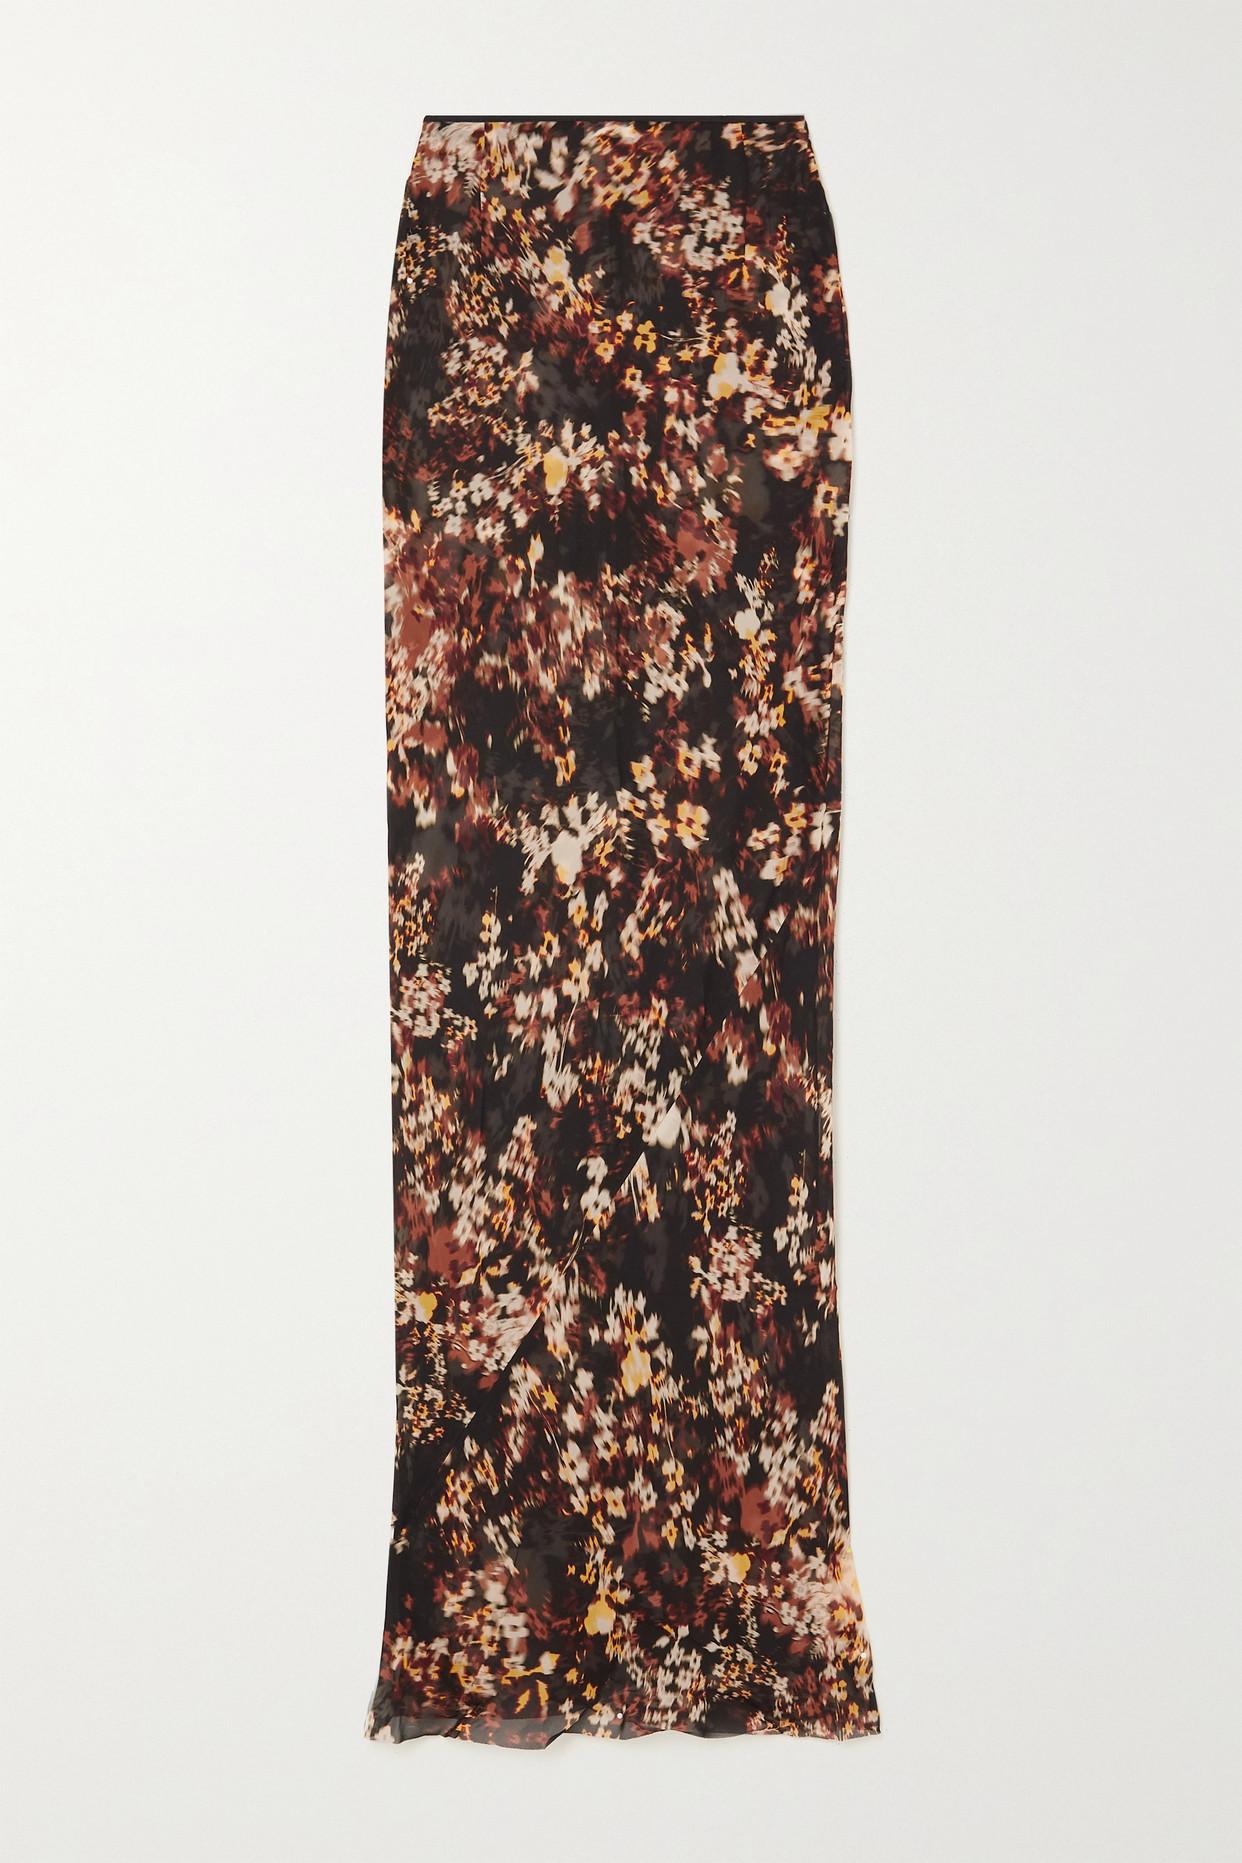 Dries Van Noten Floral-print Chiffon Maxi Skirt in Brown | Lyst